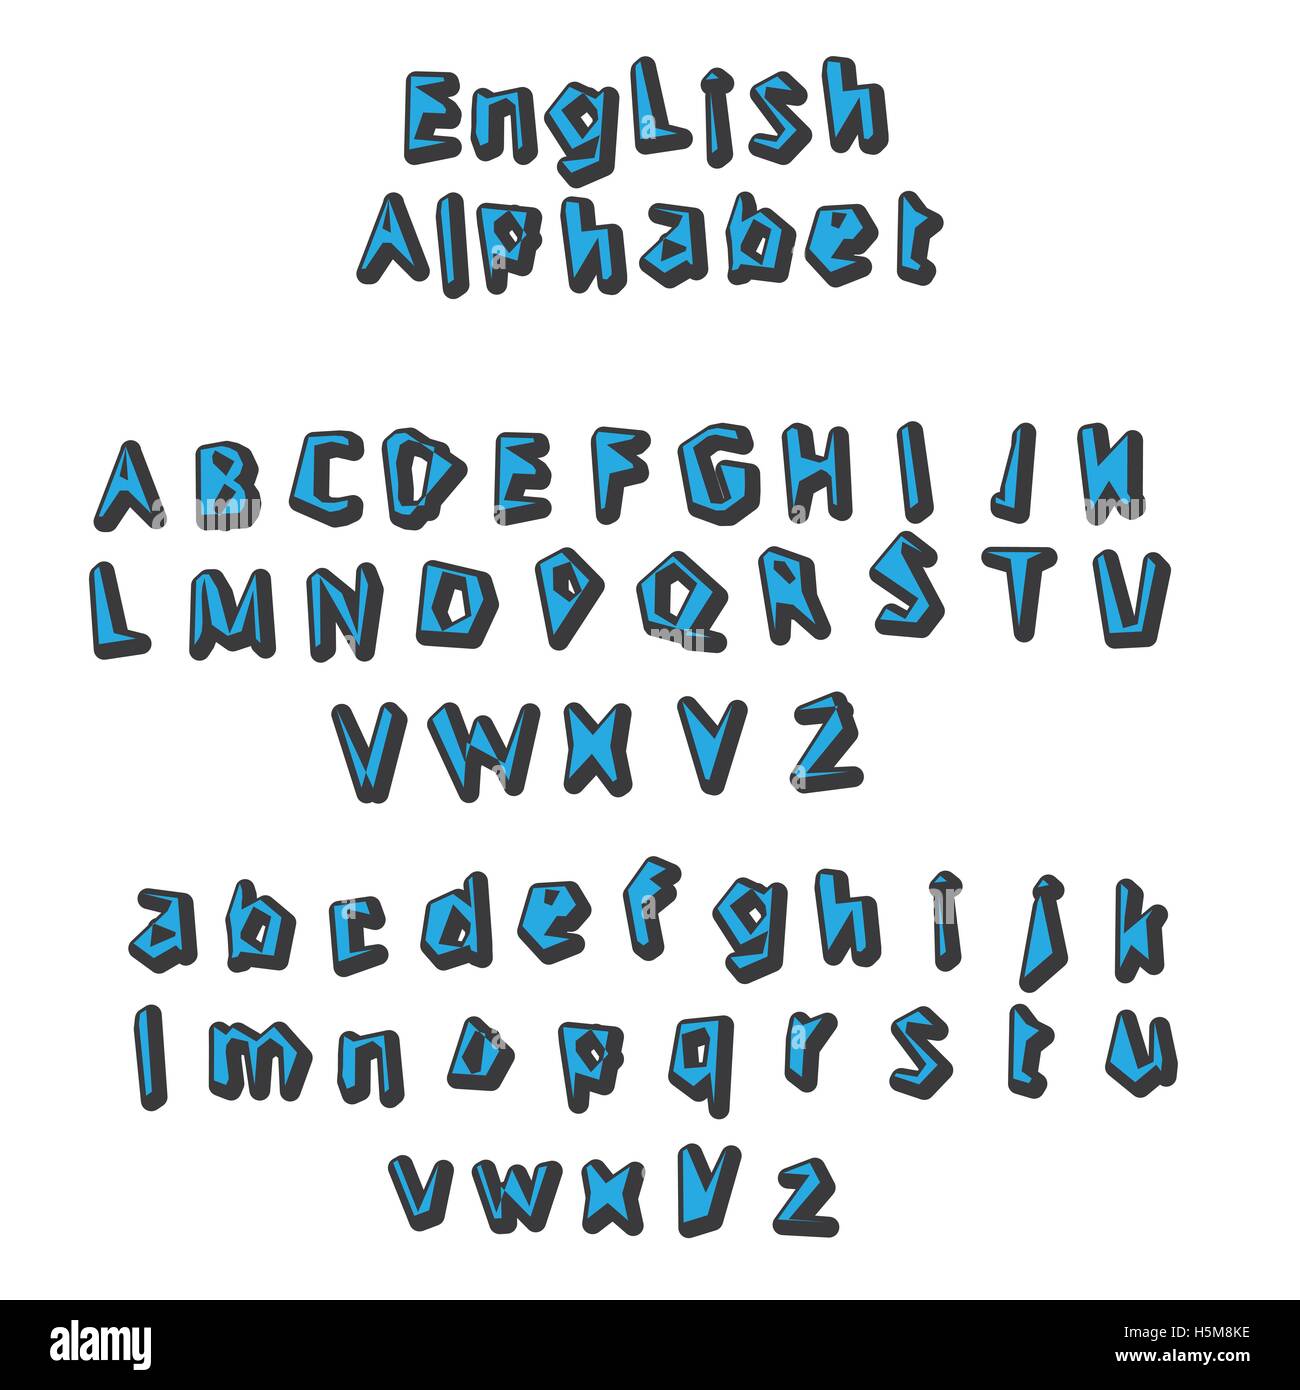 English Alphabet letters set vector illustration Stock Vector